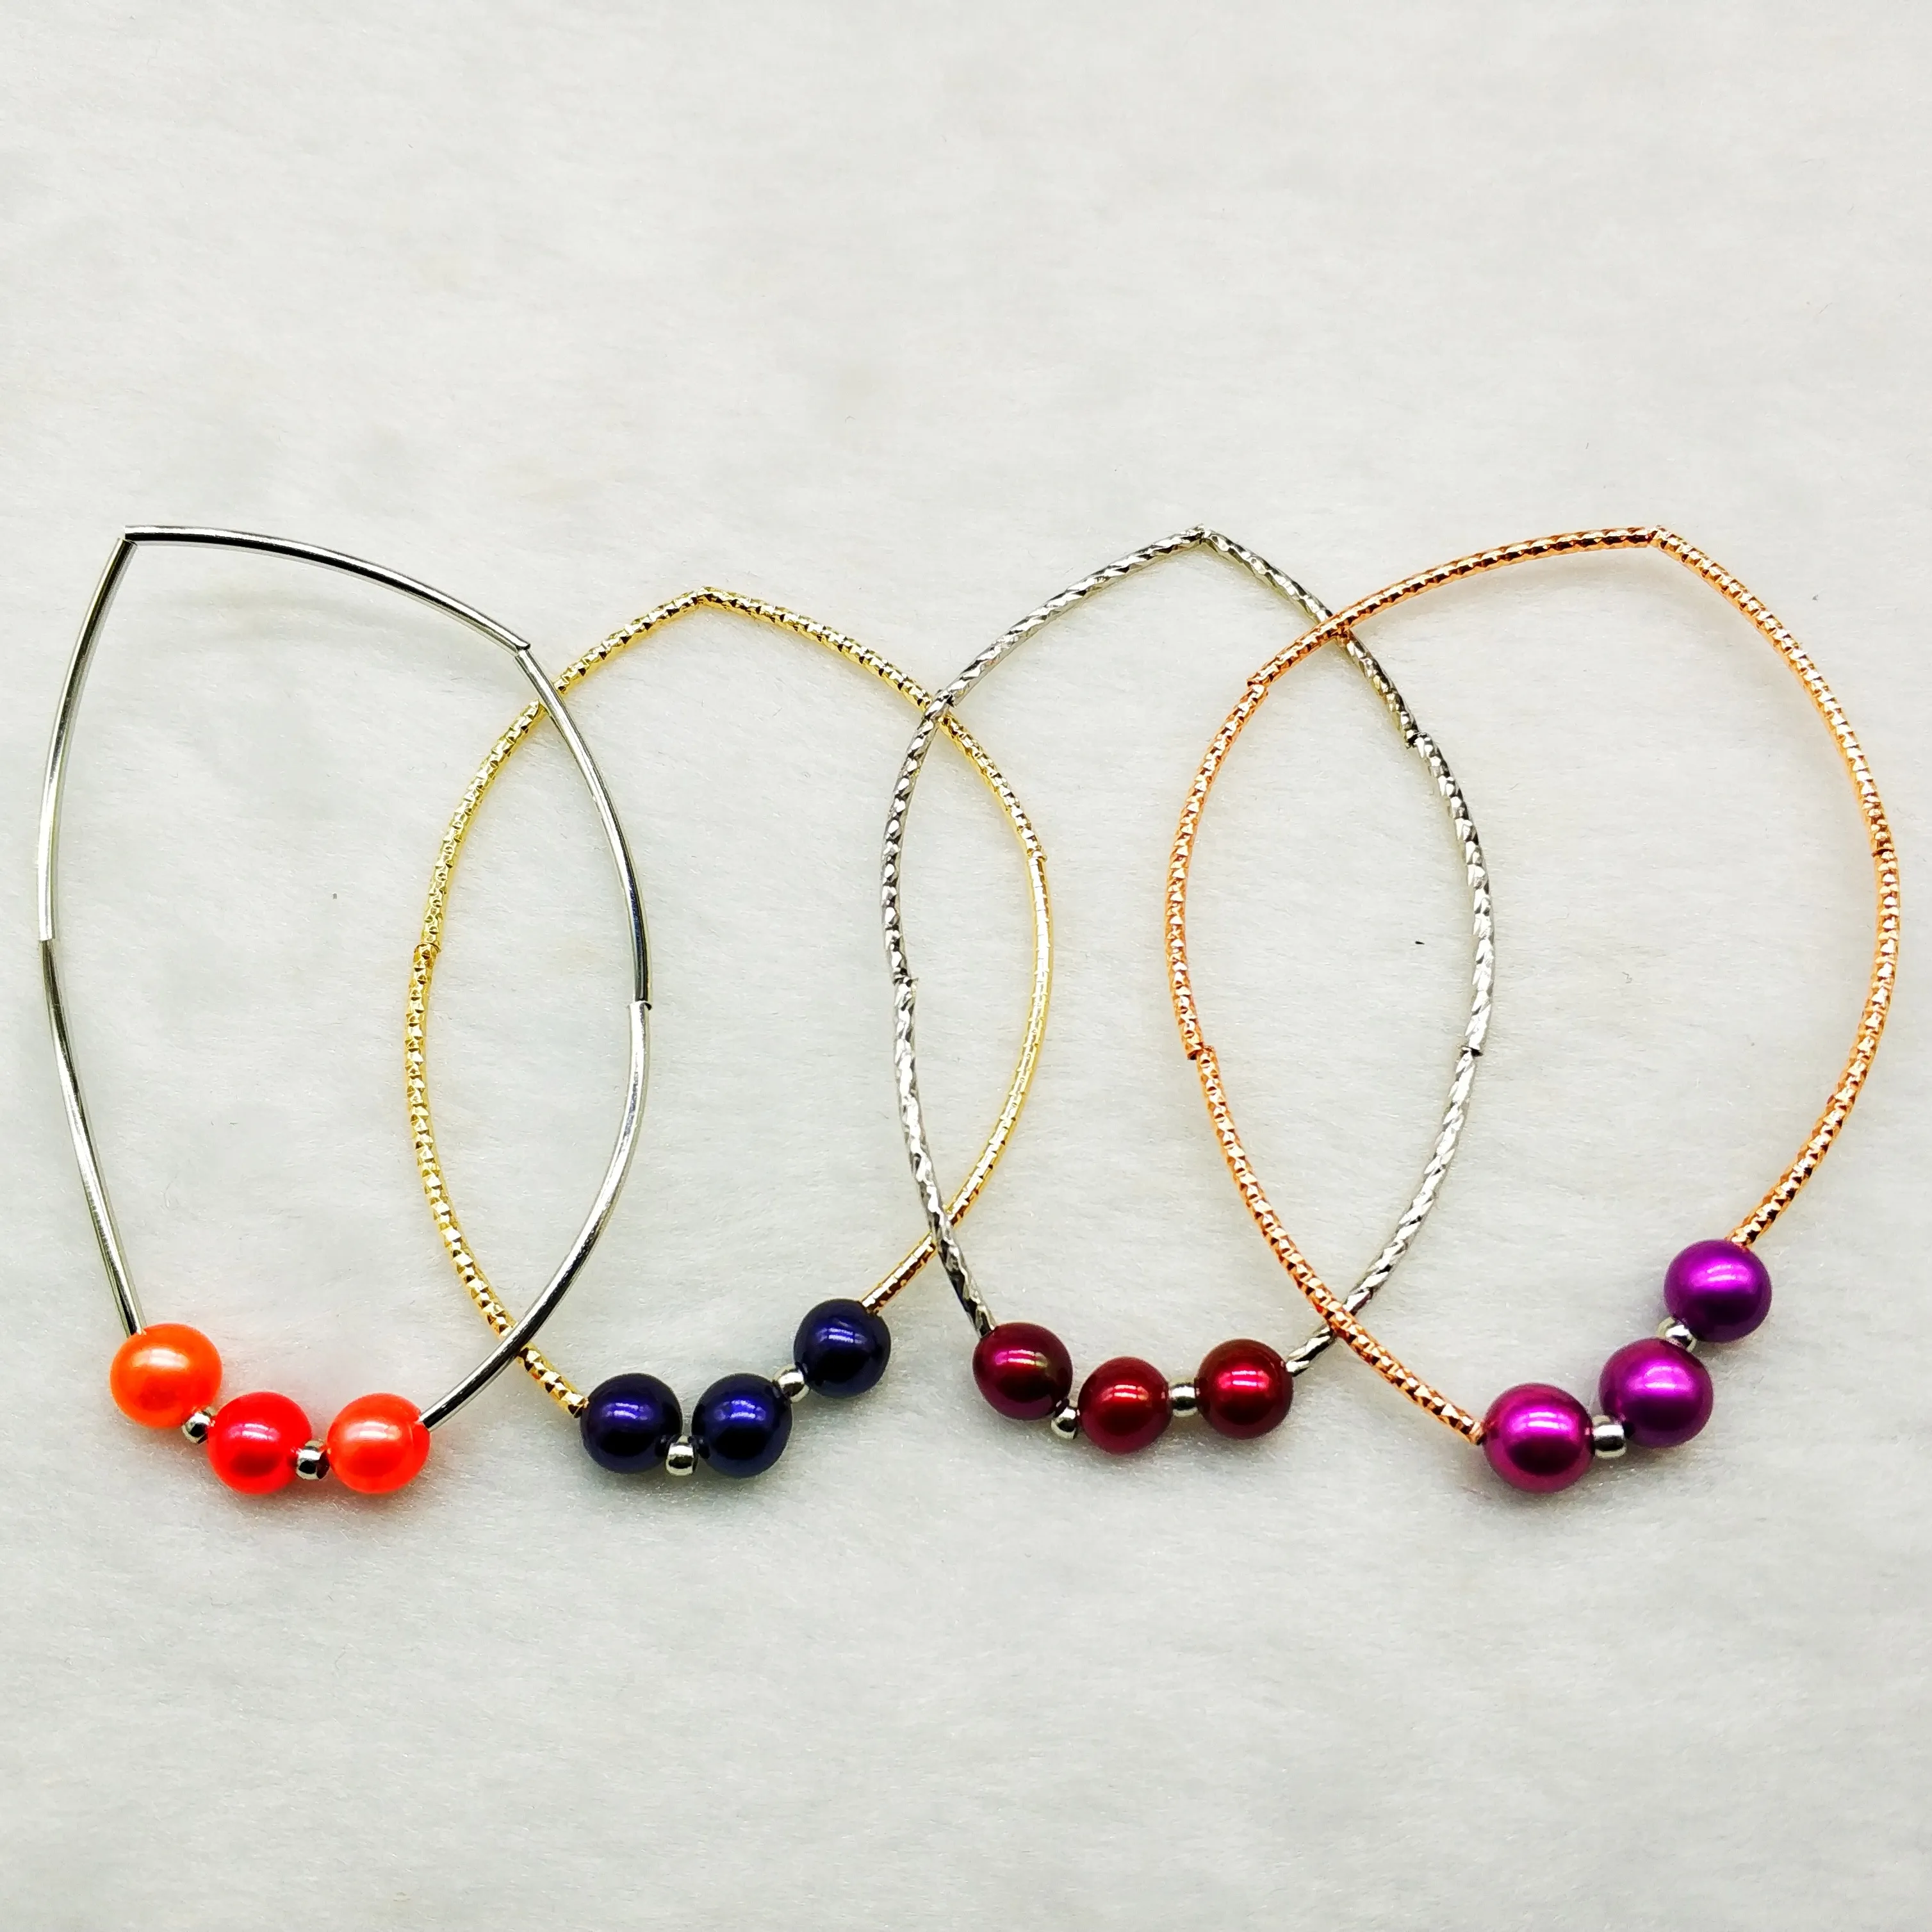 Fashion creative handmade natural freshwater pearl 6-7mm round color Jane elastic rope bracelet unblocking chakras